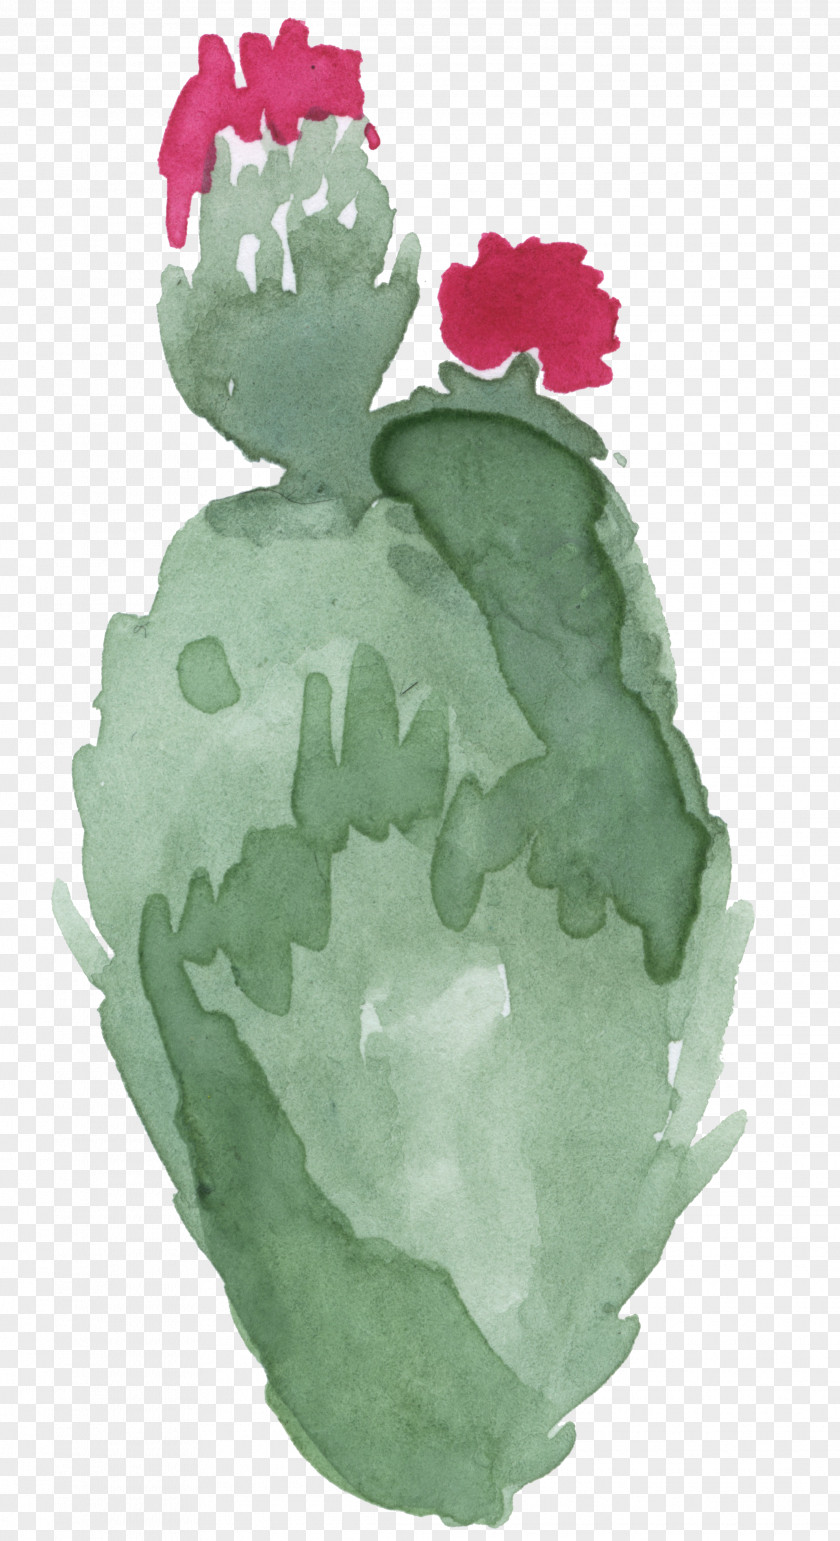 Cactus Illustration PNG